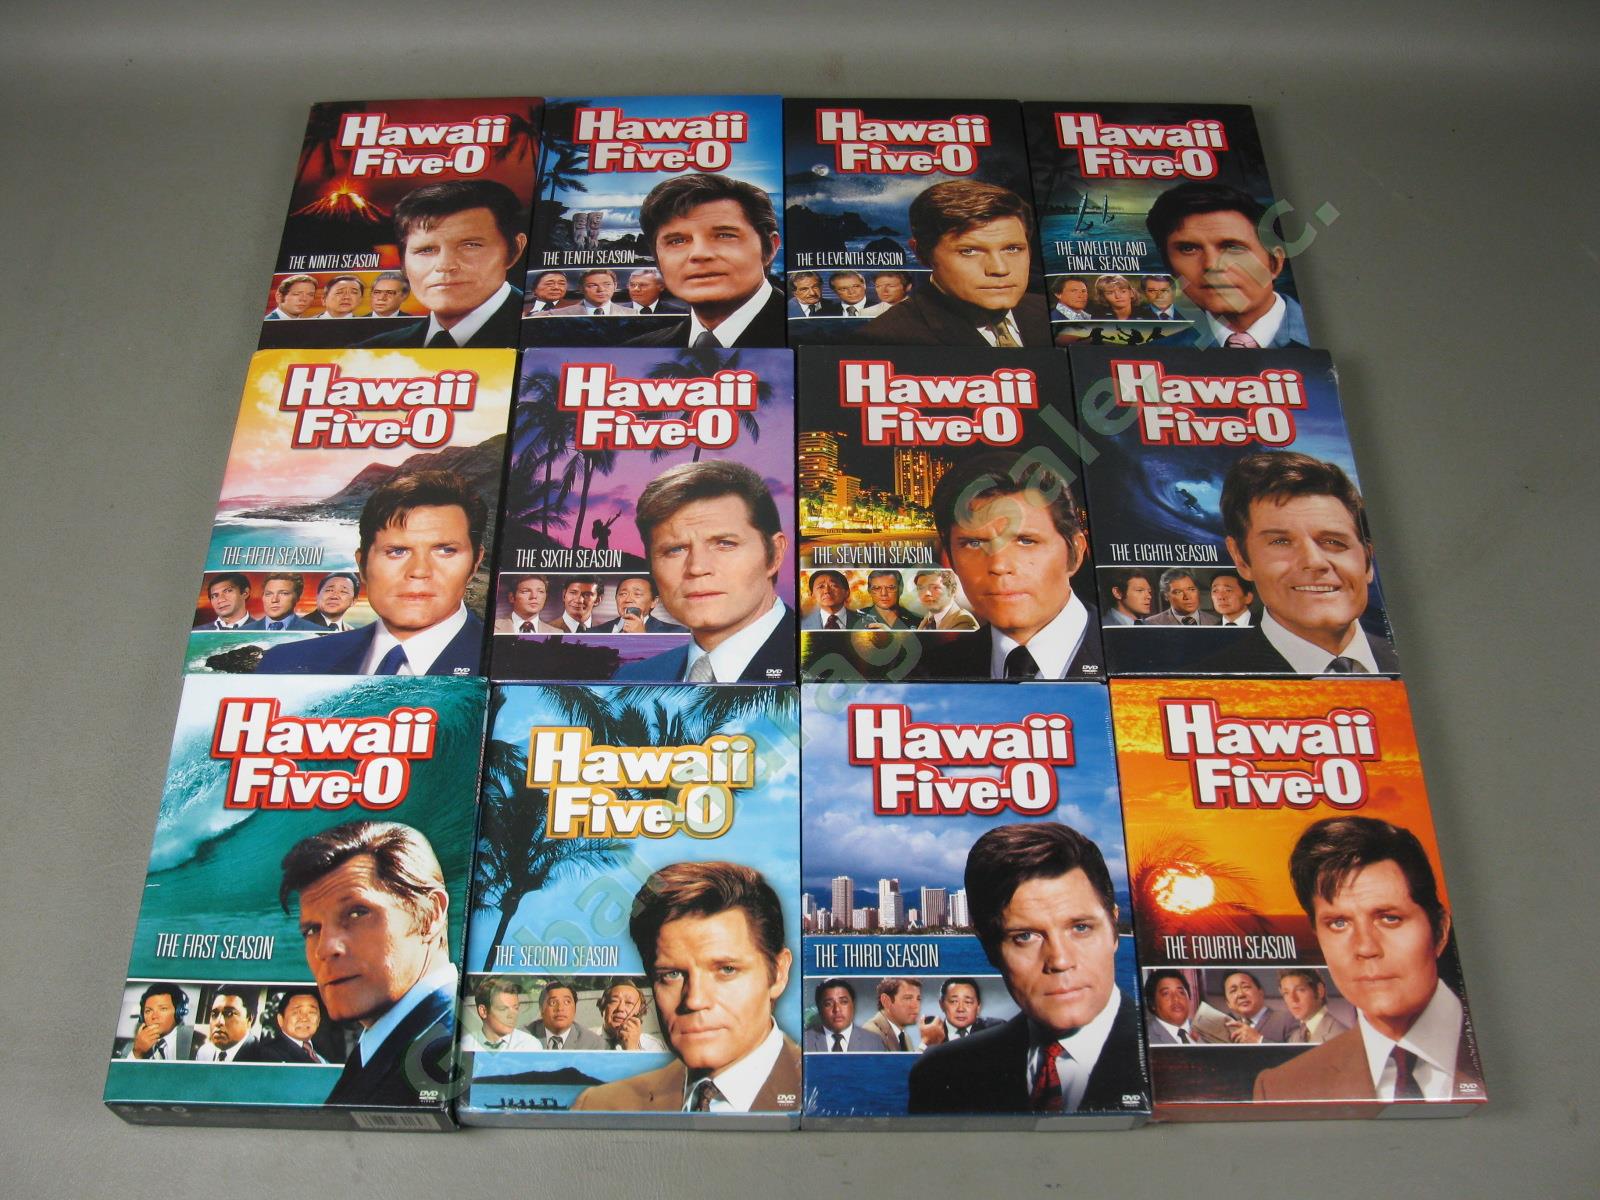 Hawaii Five-0 5-0 Complete Series 72-DVD Set Lot Seasons 1-12 MOSTLY SEALED! NR! 2